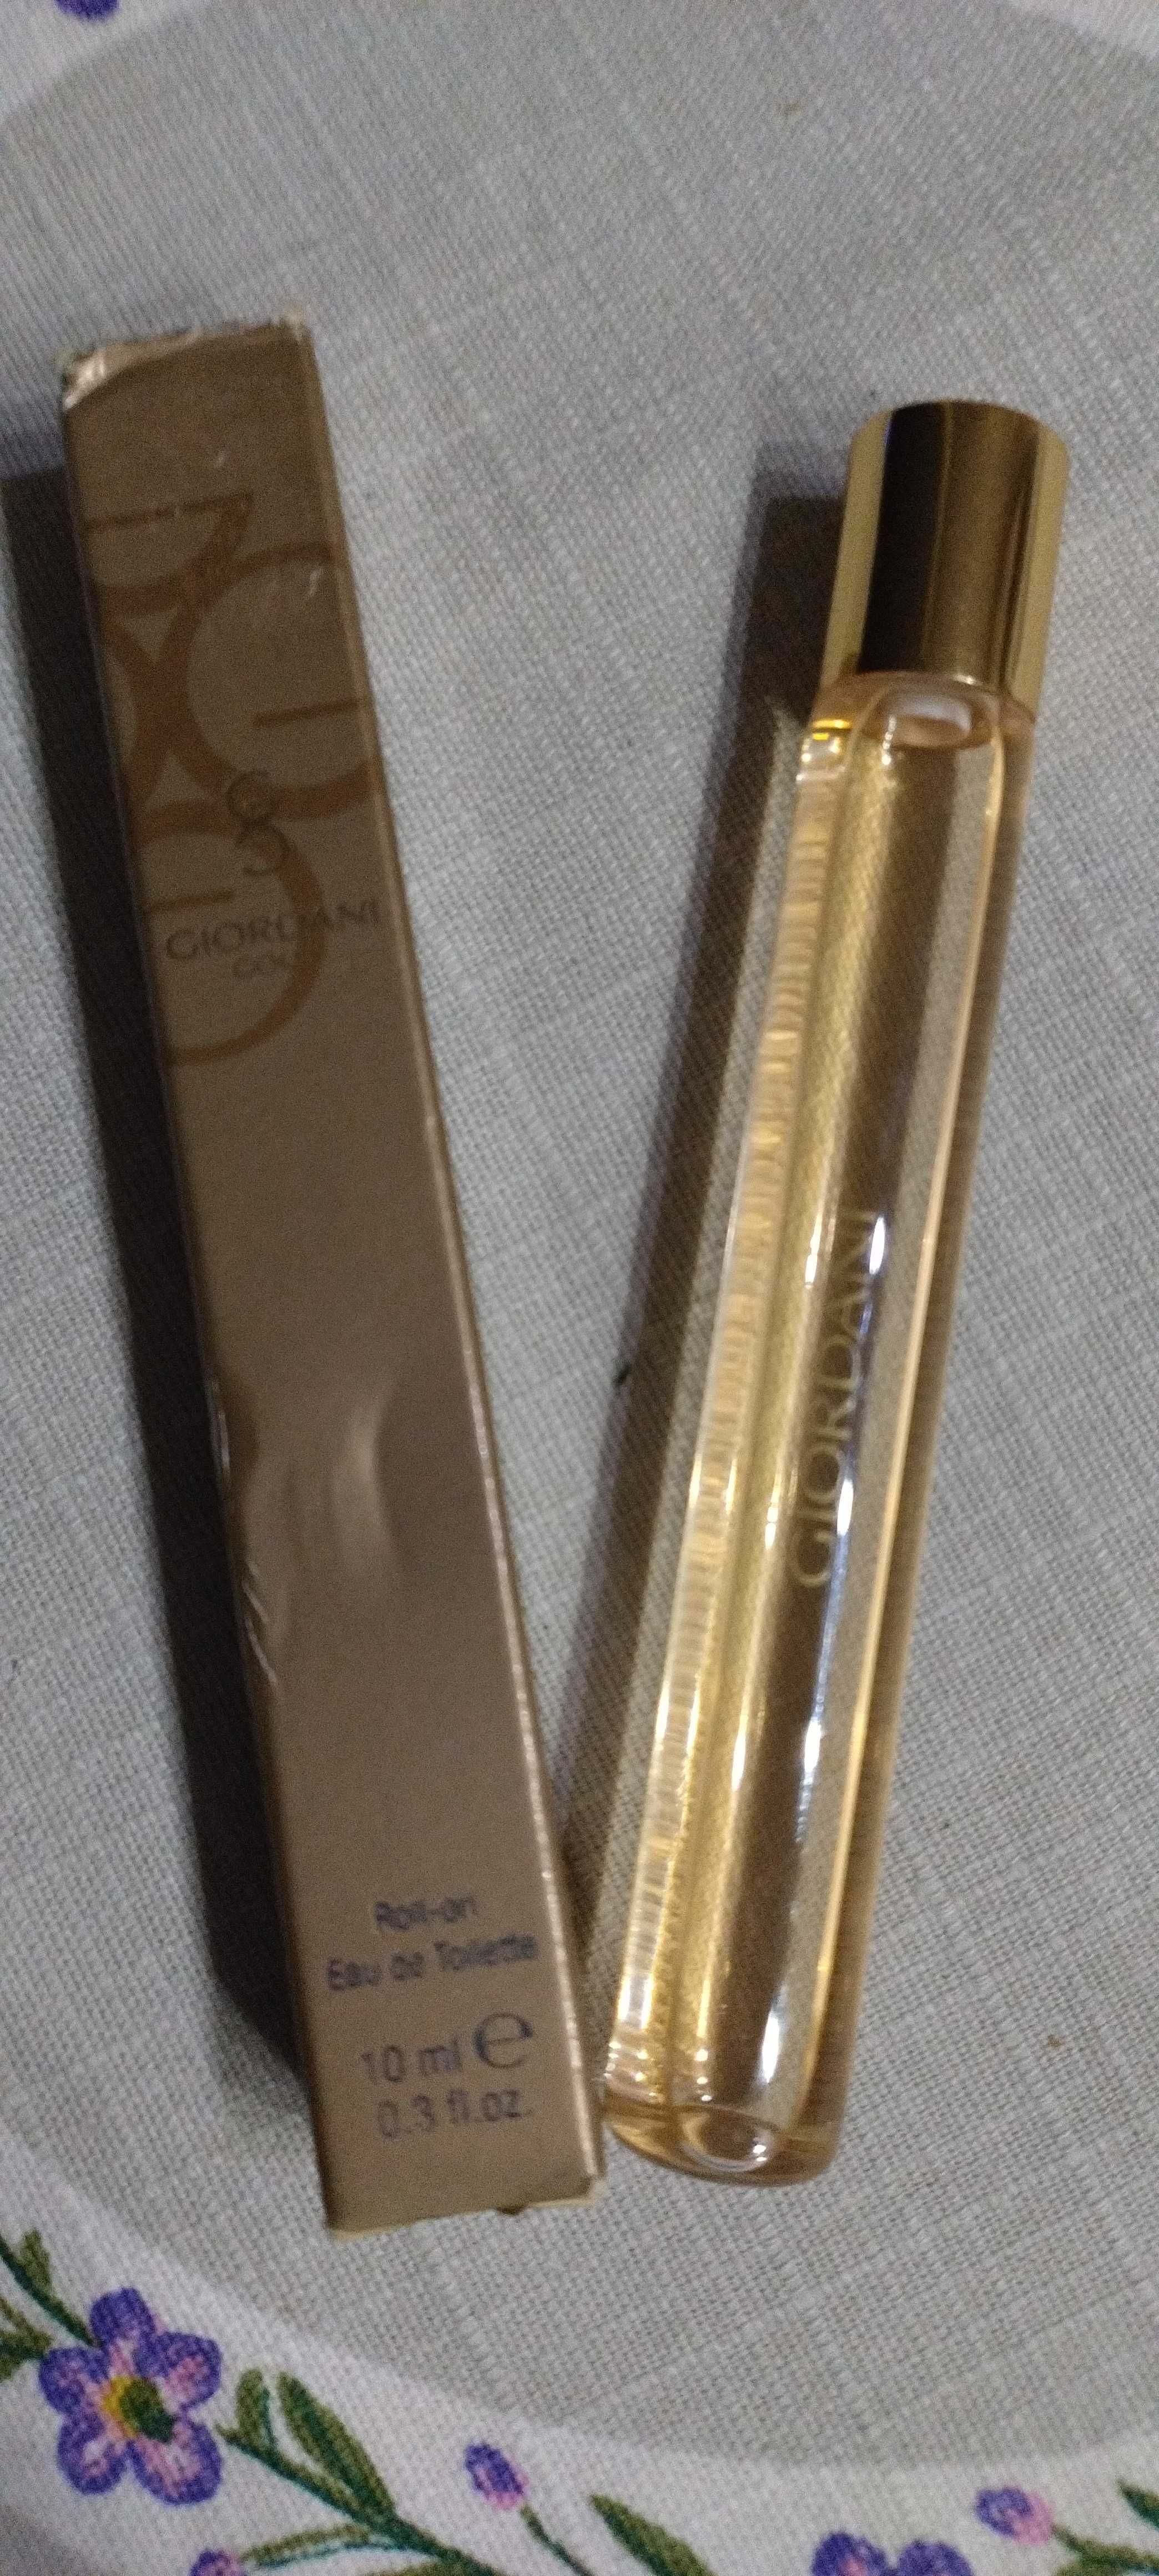 Perfumy Giordani Gold - Eau De Toilette.